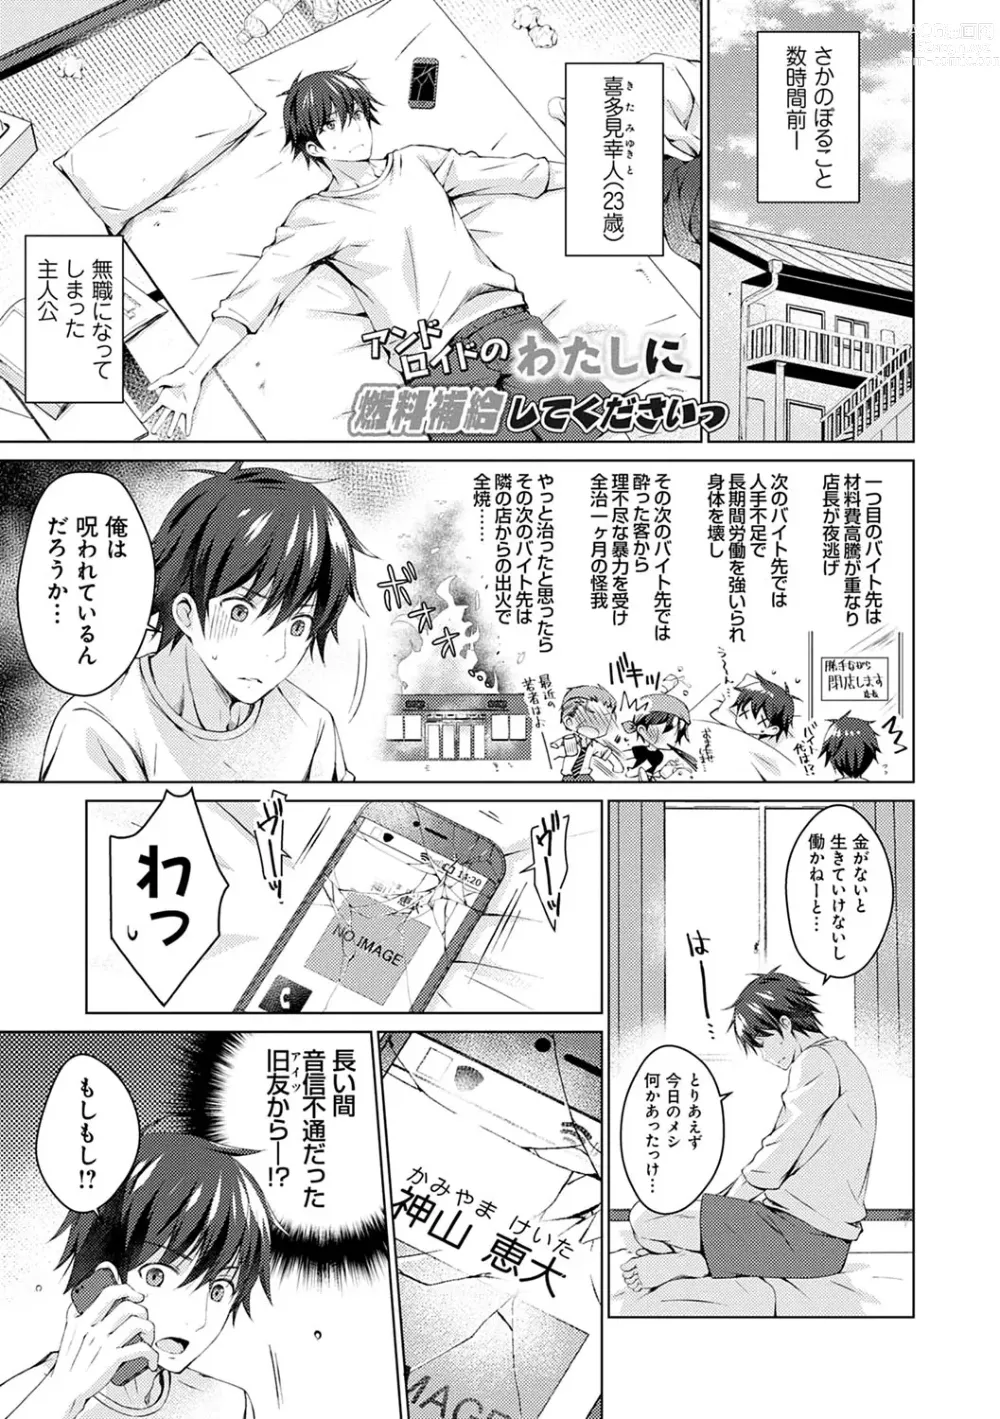 Page 12 of manga Android no Watashi ni Nenryou Hokyuu shite Kudasai - Please refuel me. Because... Im an android.